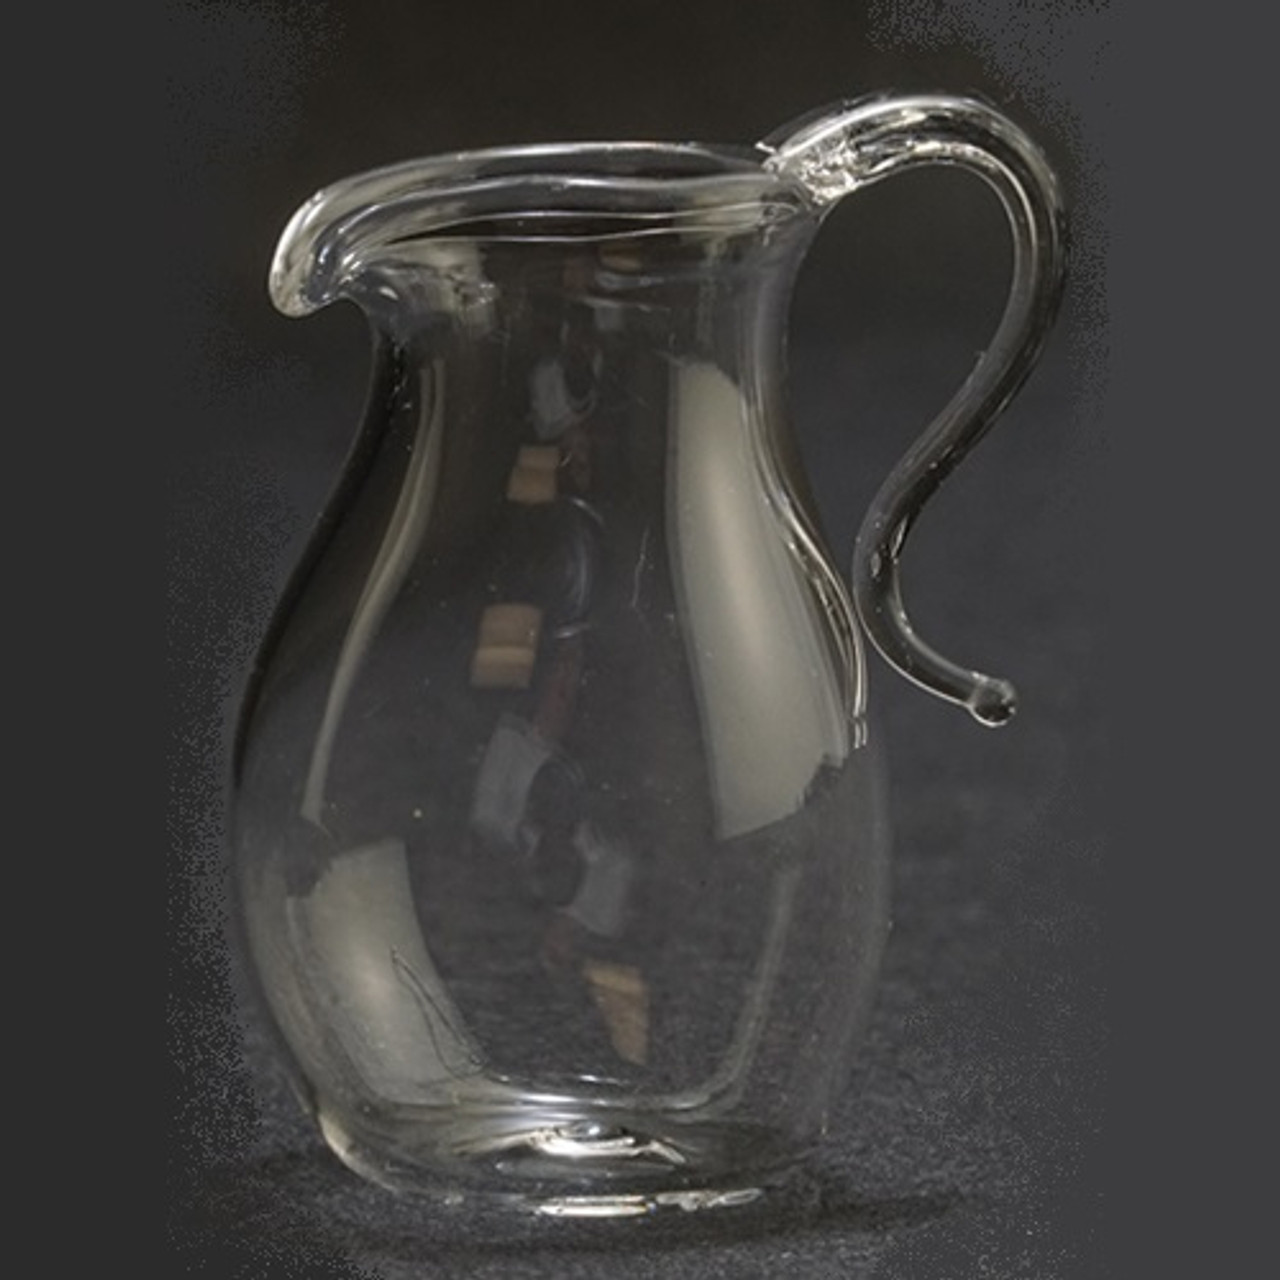 One-inch (1:12) scale dollhouse miniature glass pitcher (IM65345)